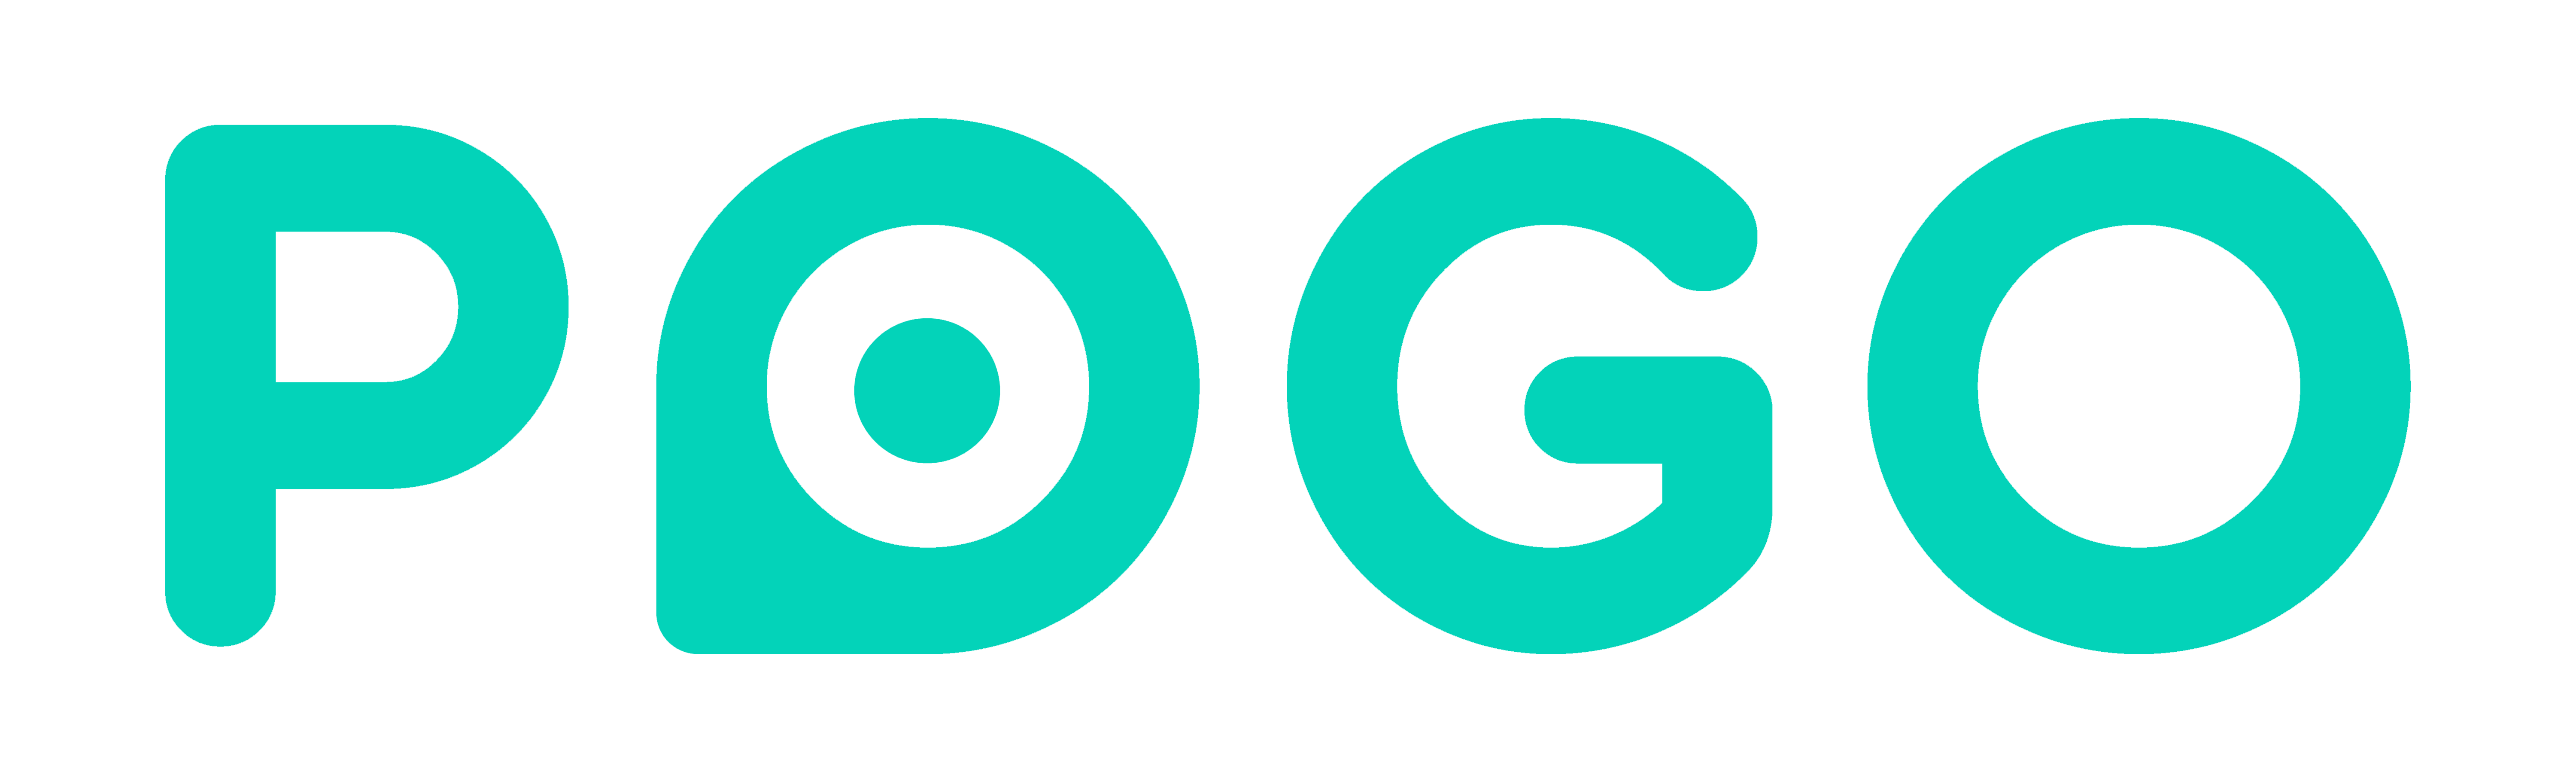 logo de pogo people on the go